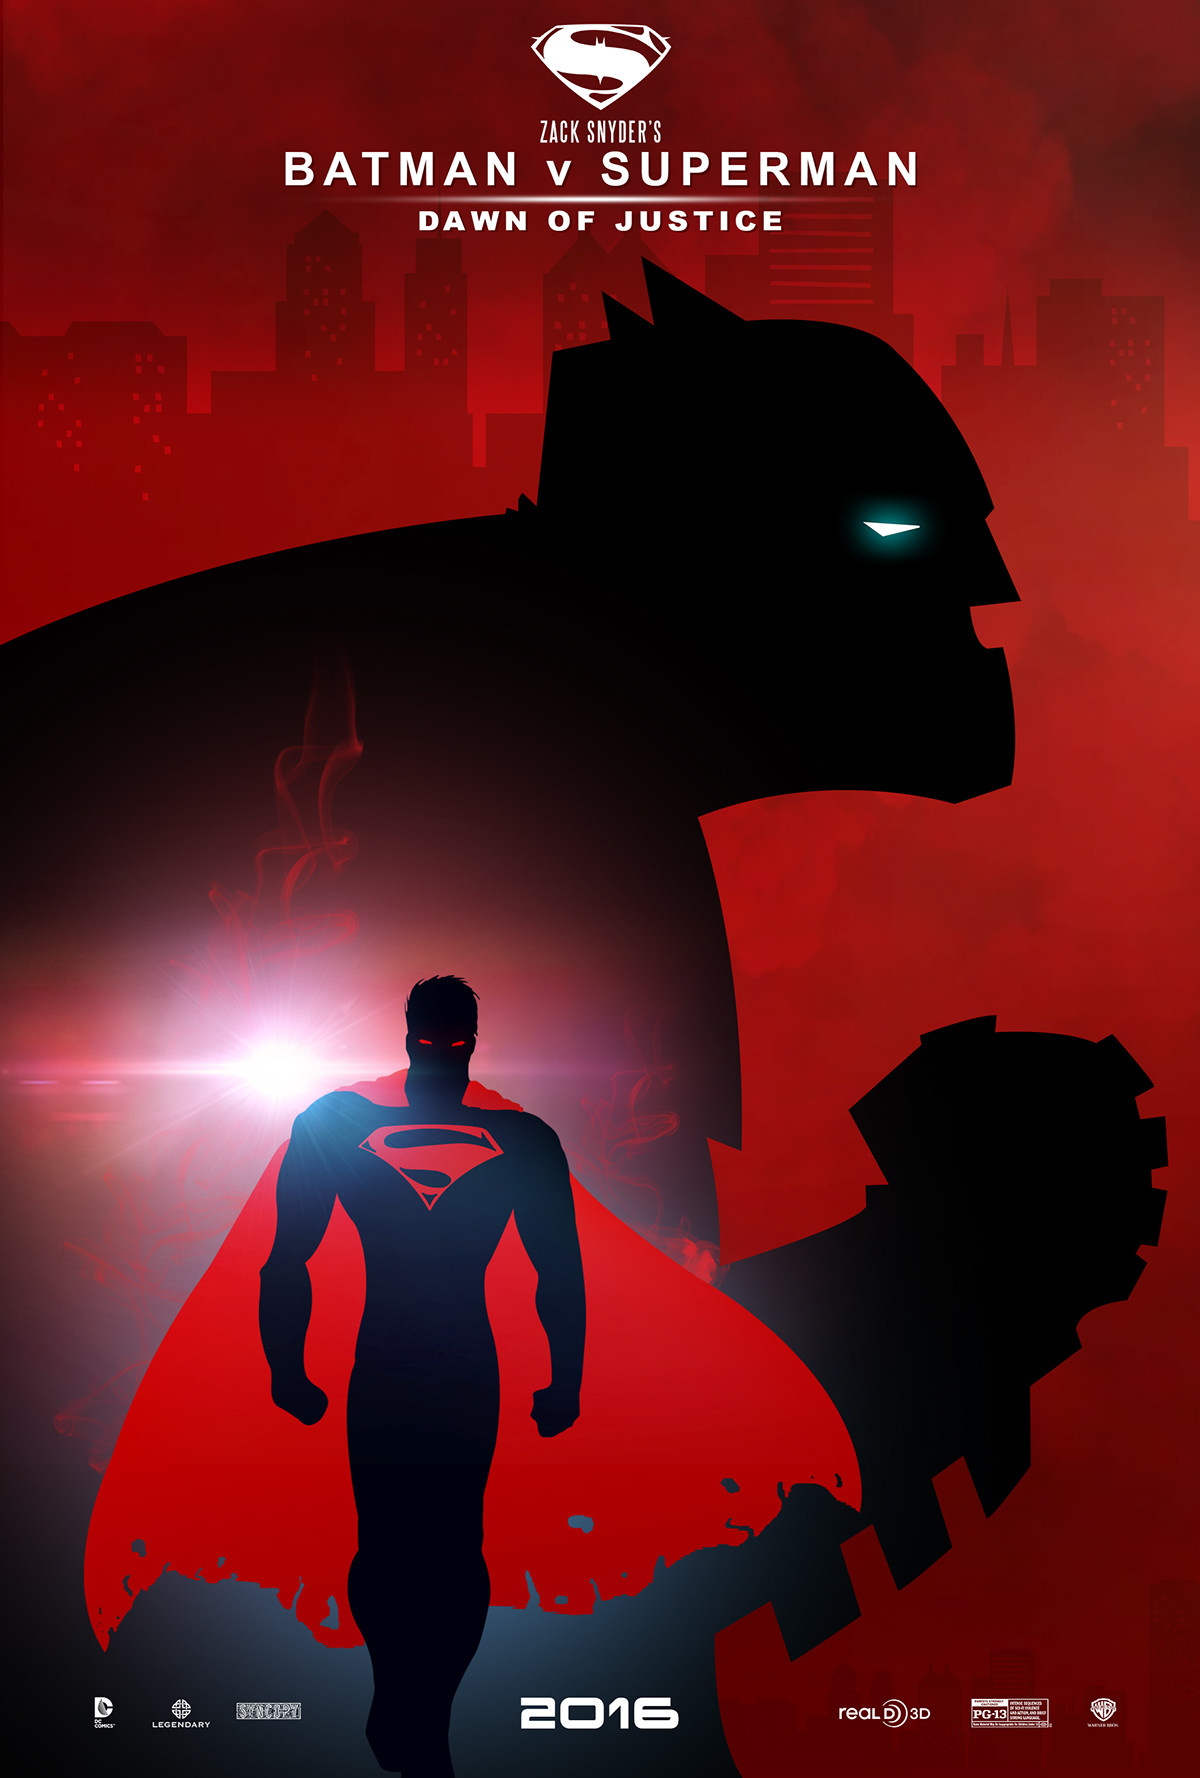 Talha Khan - Batman vs Superman Poster